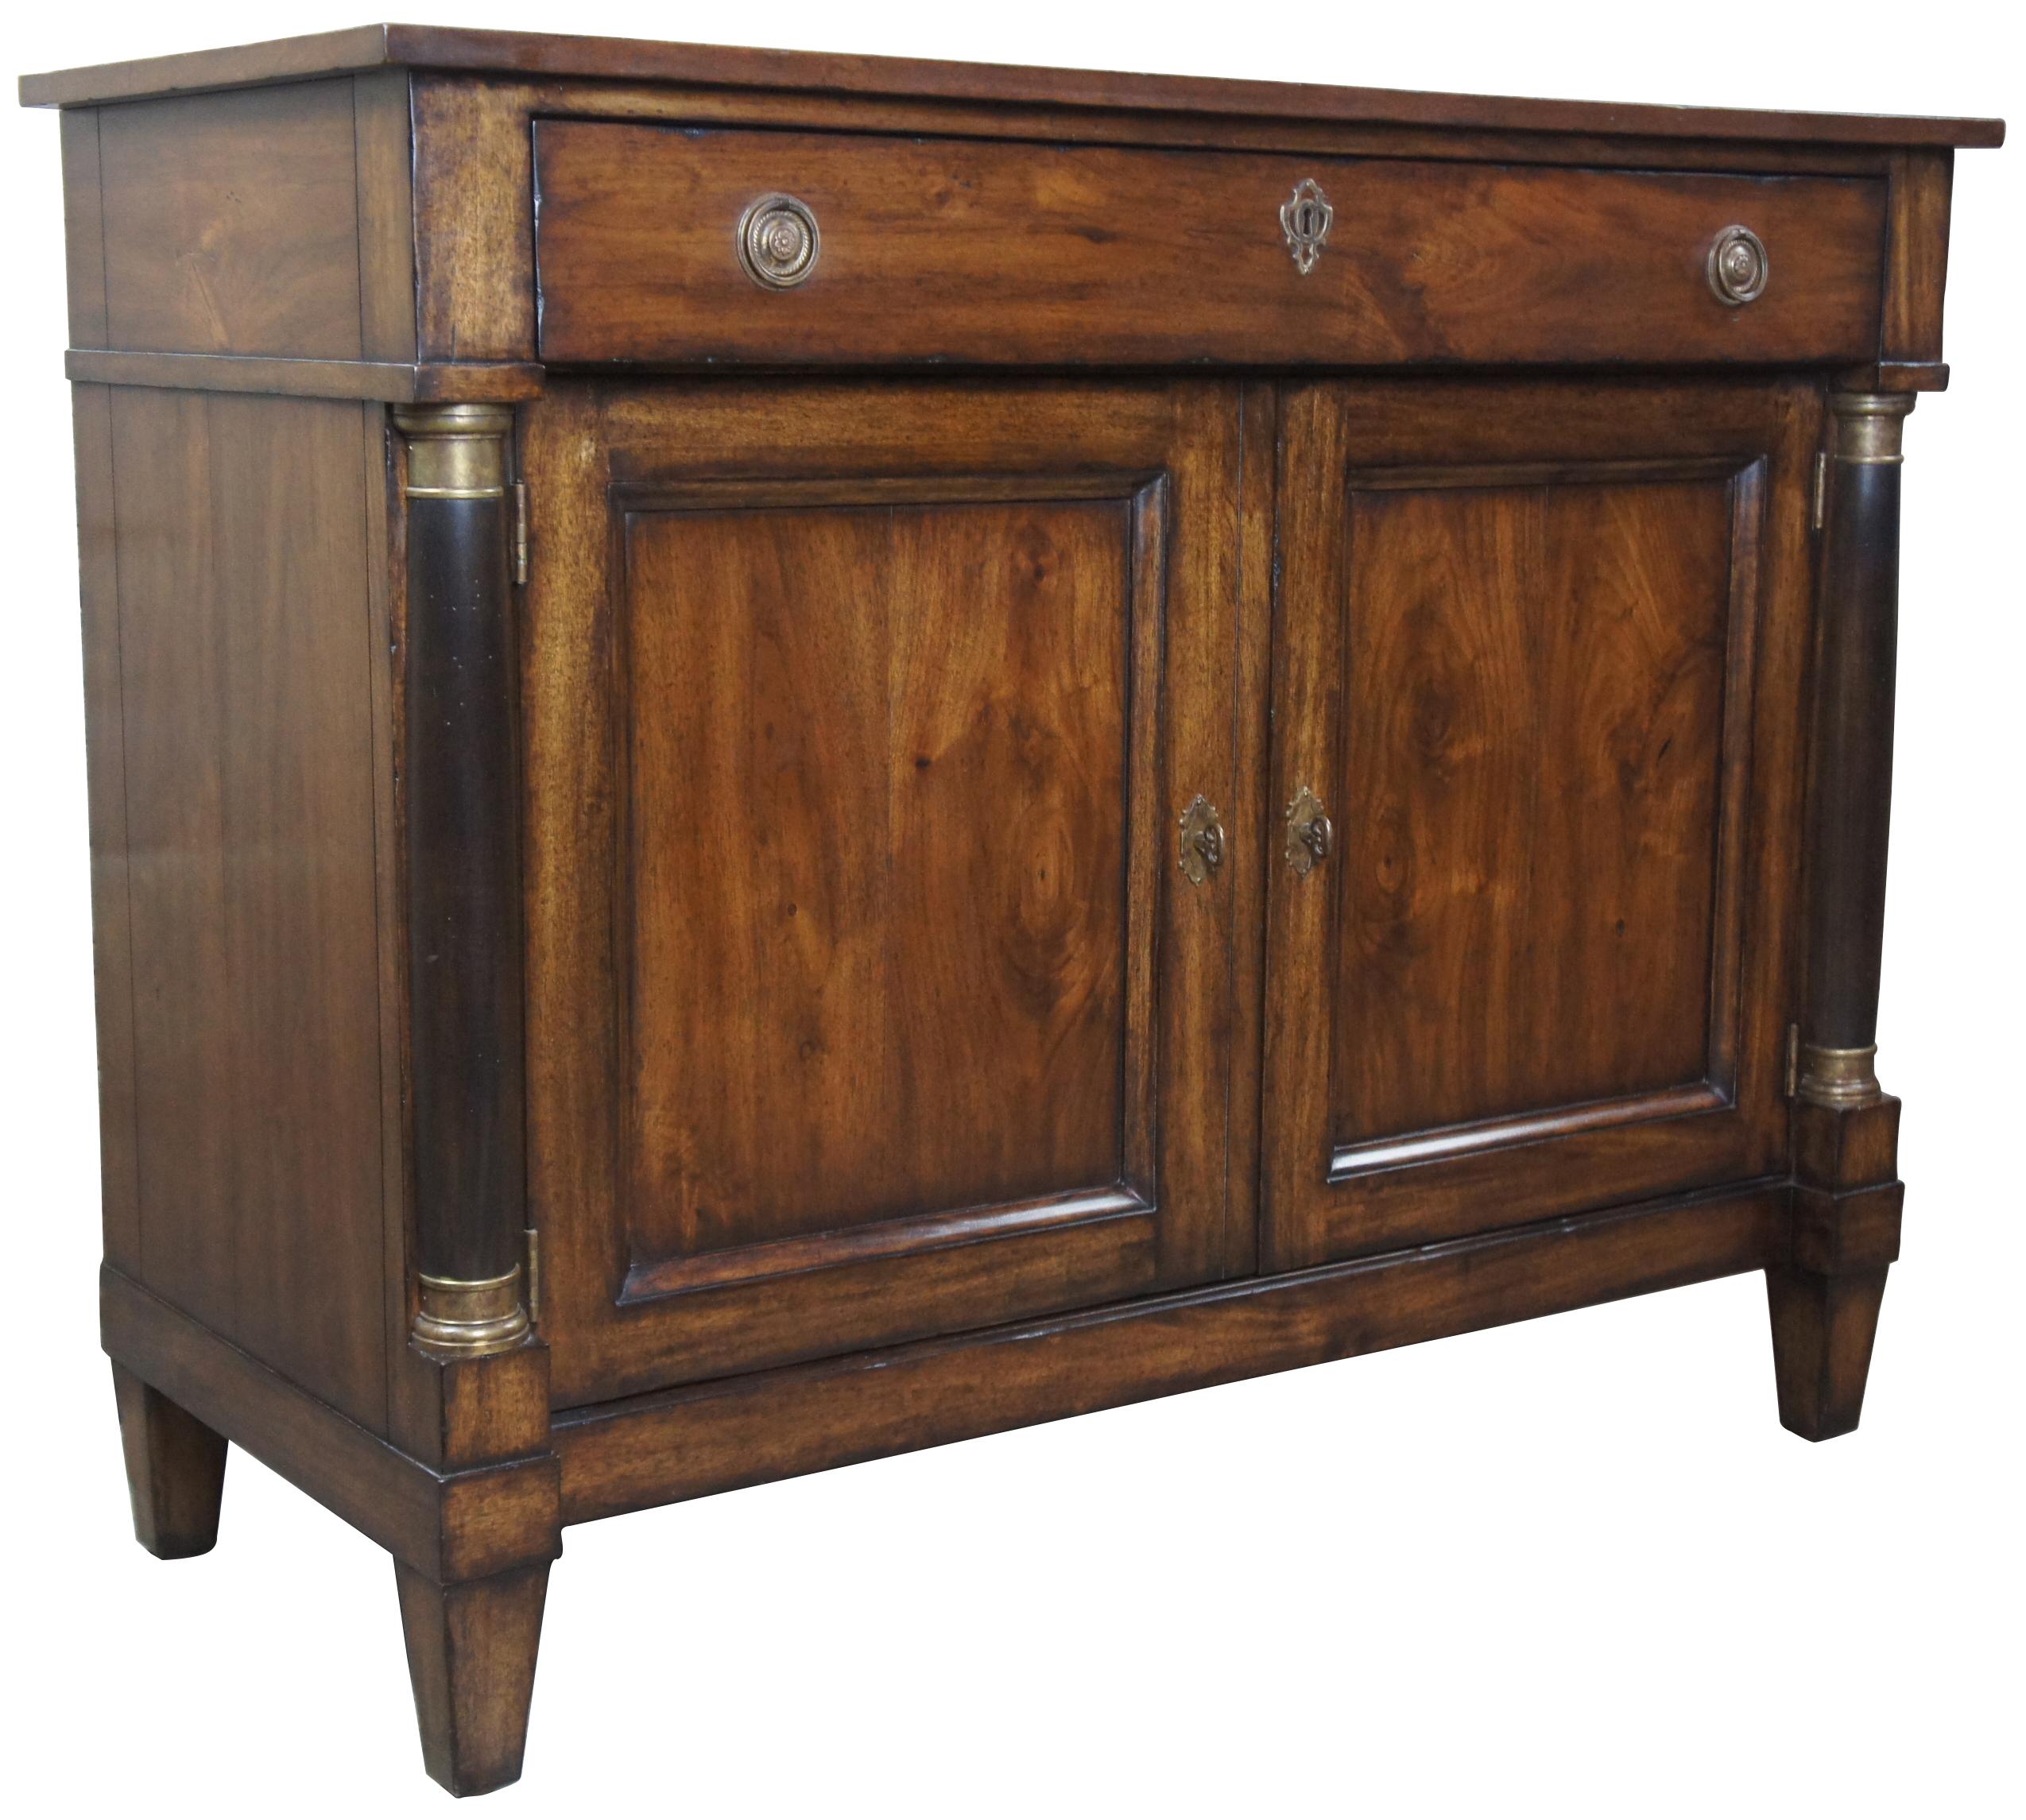 Henredon acquisitions neoclassical mahogany buffet cabinet door chest server, measures: 46